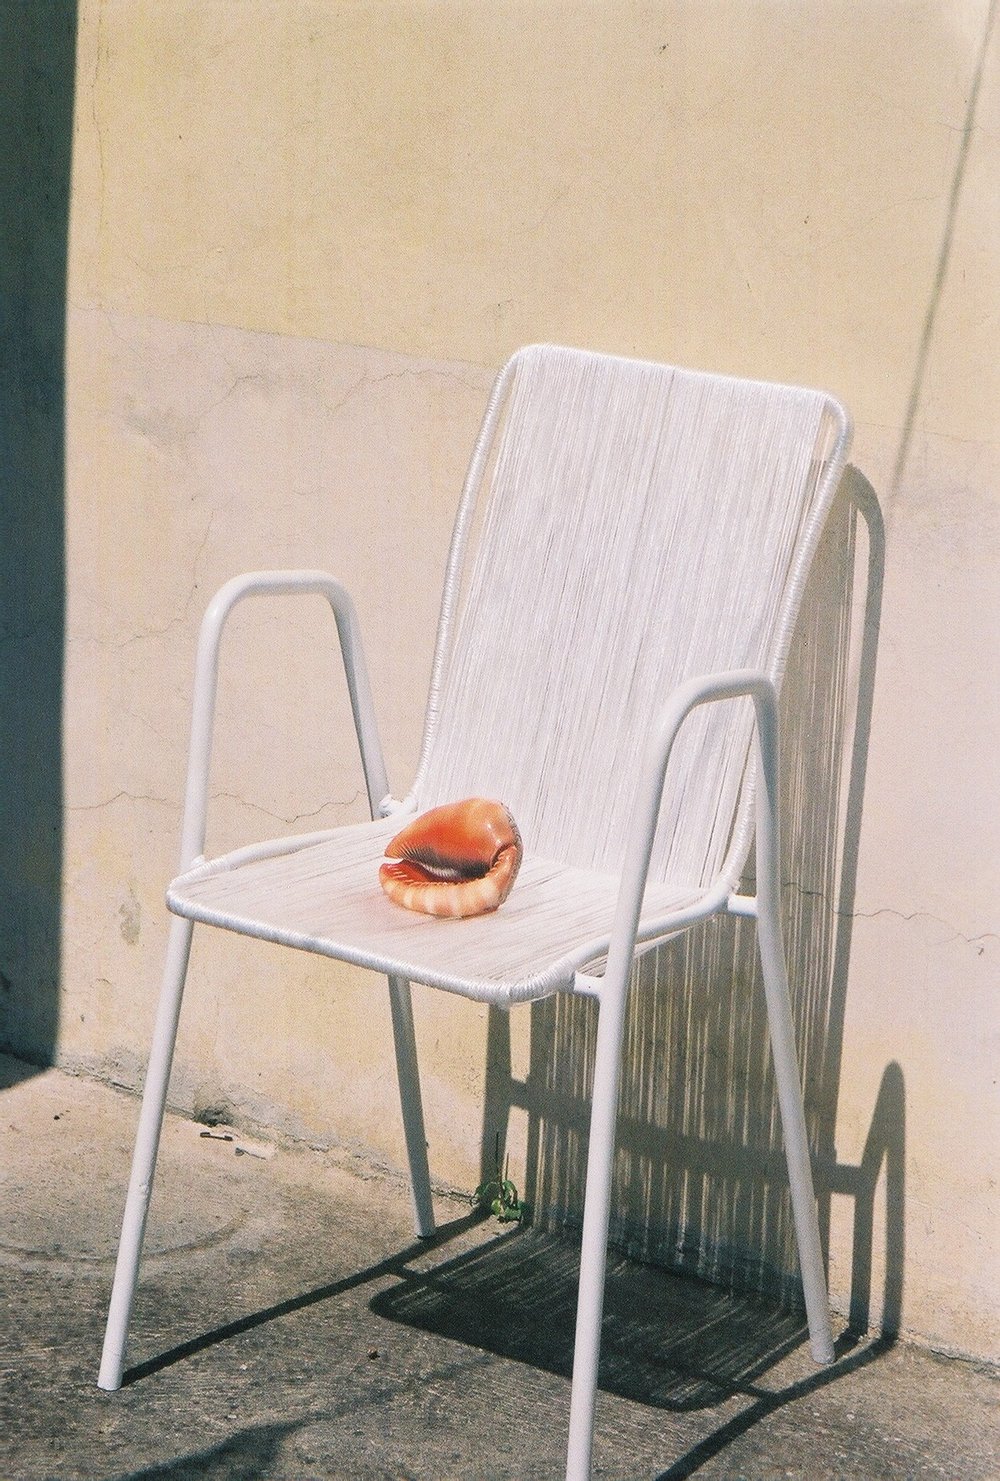 “Seashell on a rope chair” by Marina Danic